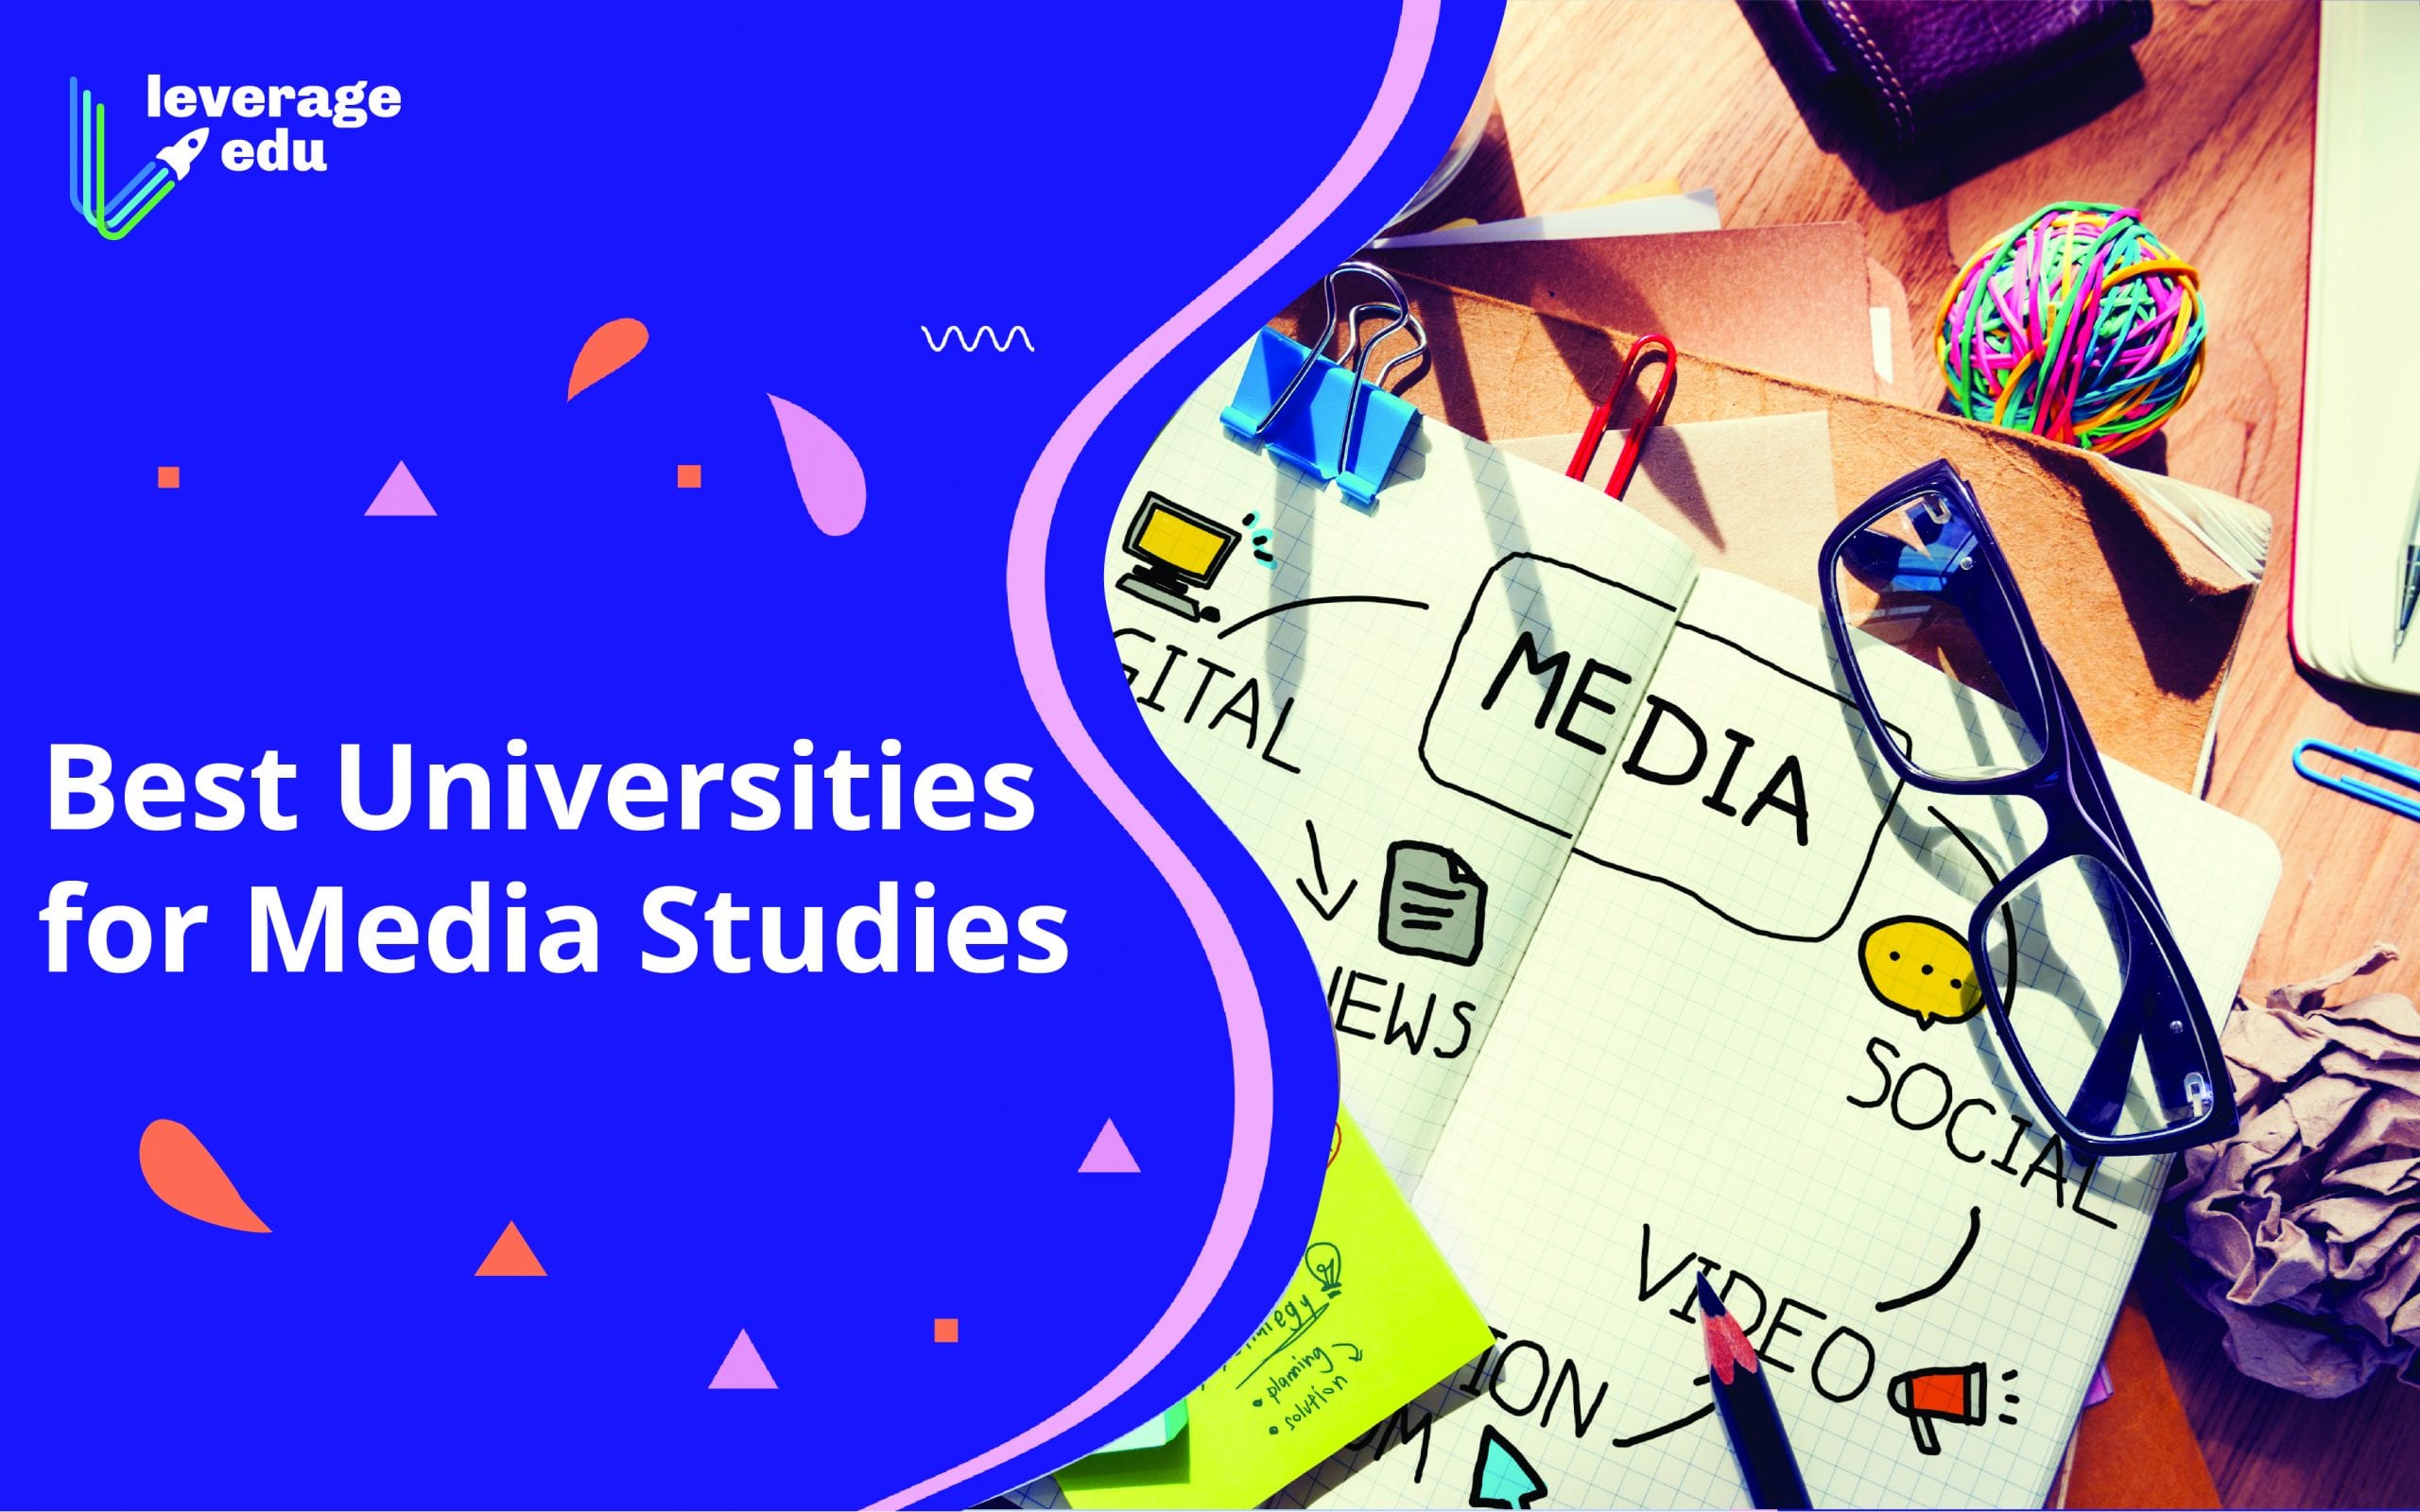 Best Universities for Media Studies in the World 2021 - Leverage Edu